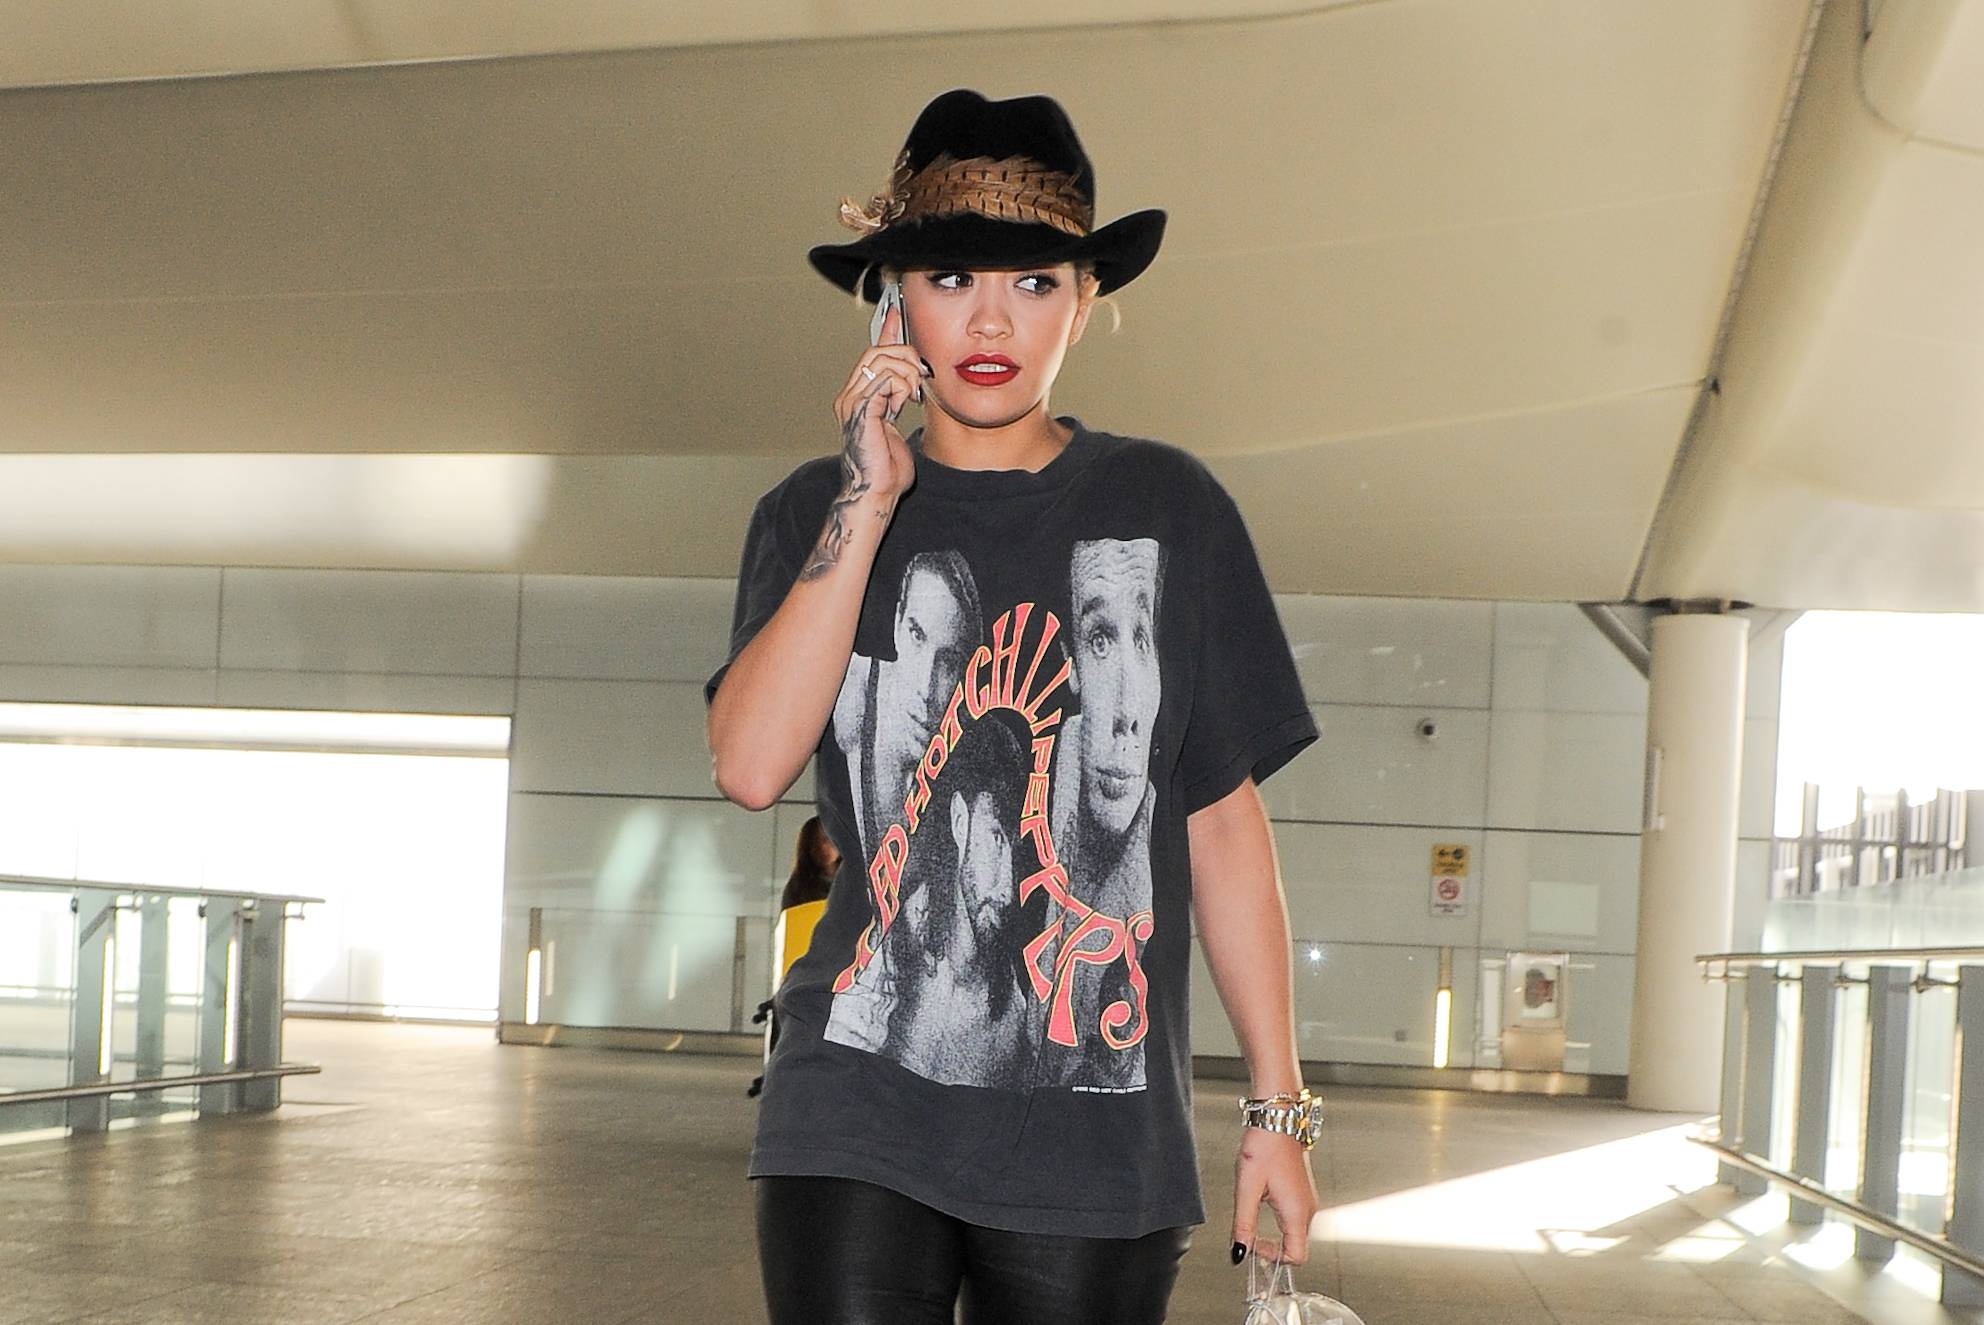 Rita Ora arriving at Heathrow airport